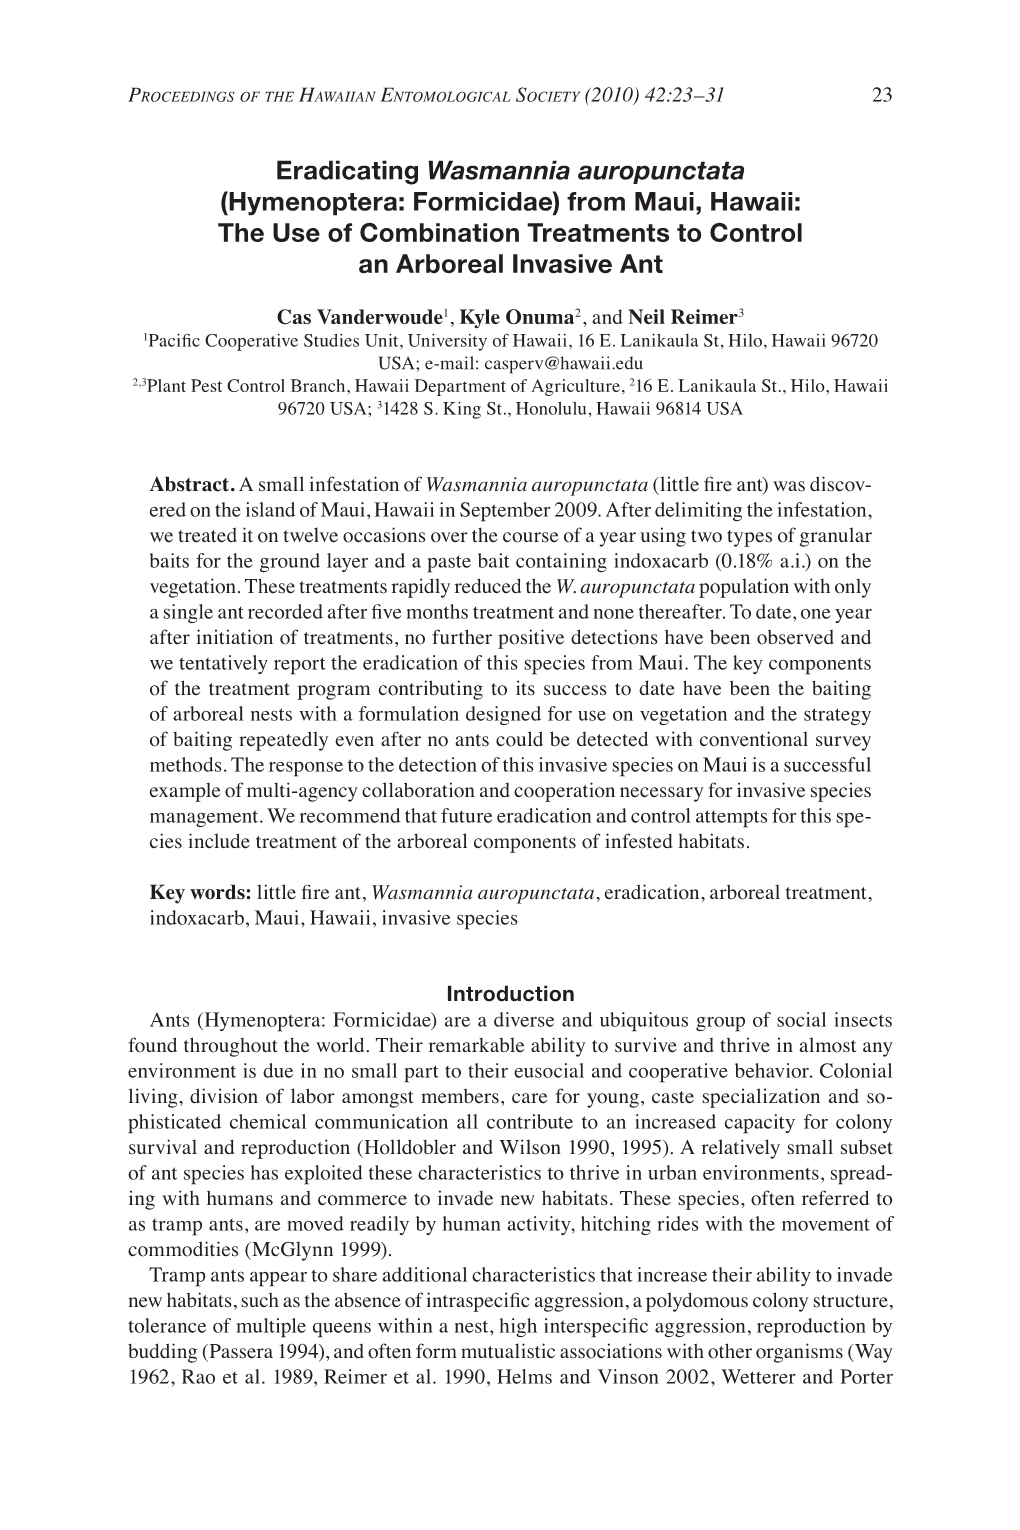 Eradicating Wasmannia Auropunctata (Hymenoptera: Formicidae) from Maui, Hawaii: the Use of Combination Treatments to Control an Arboreal Invasive Ant